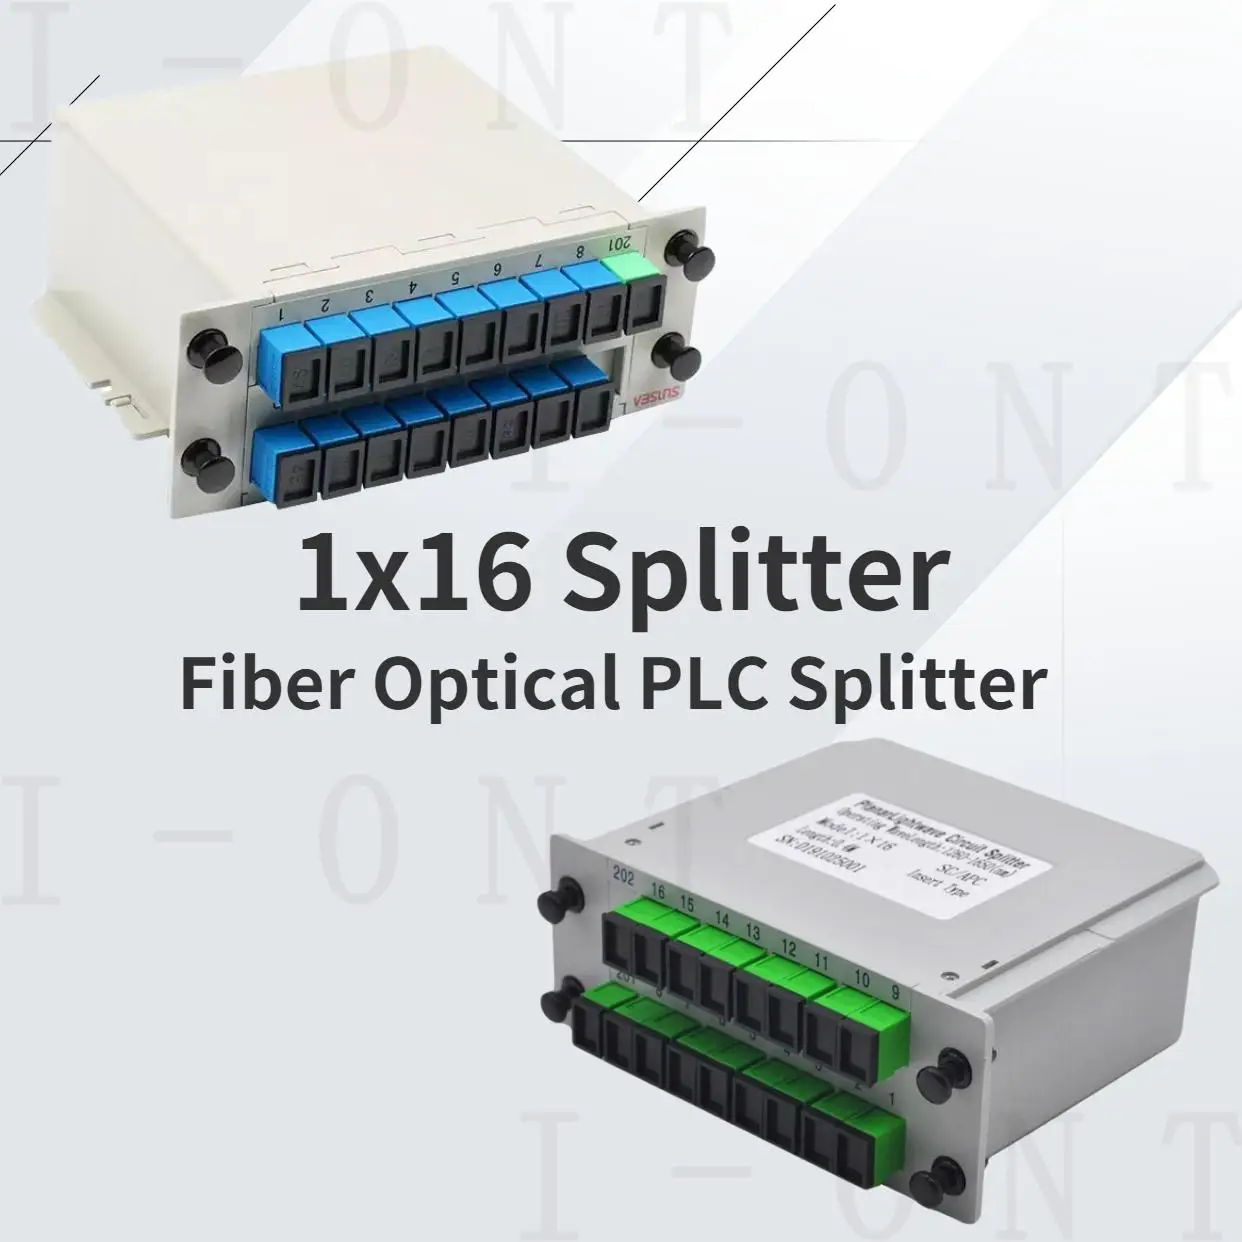 1x16 Splitter LGX Box Cassette Card Inserting SC/APC PLC splitter Module 1:16 16 Ports Fiber Optical PLC Splitter Free Shipping